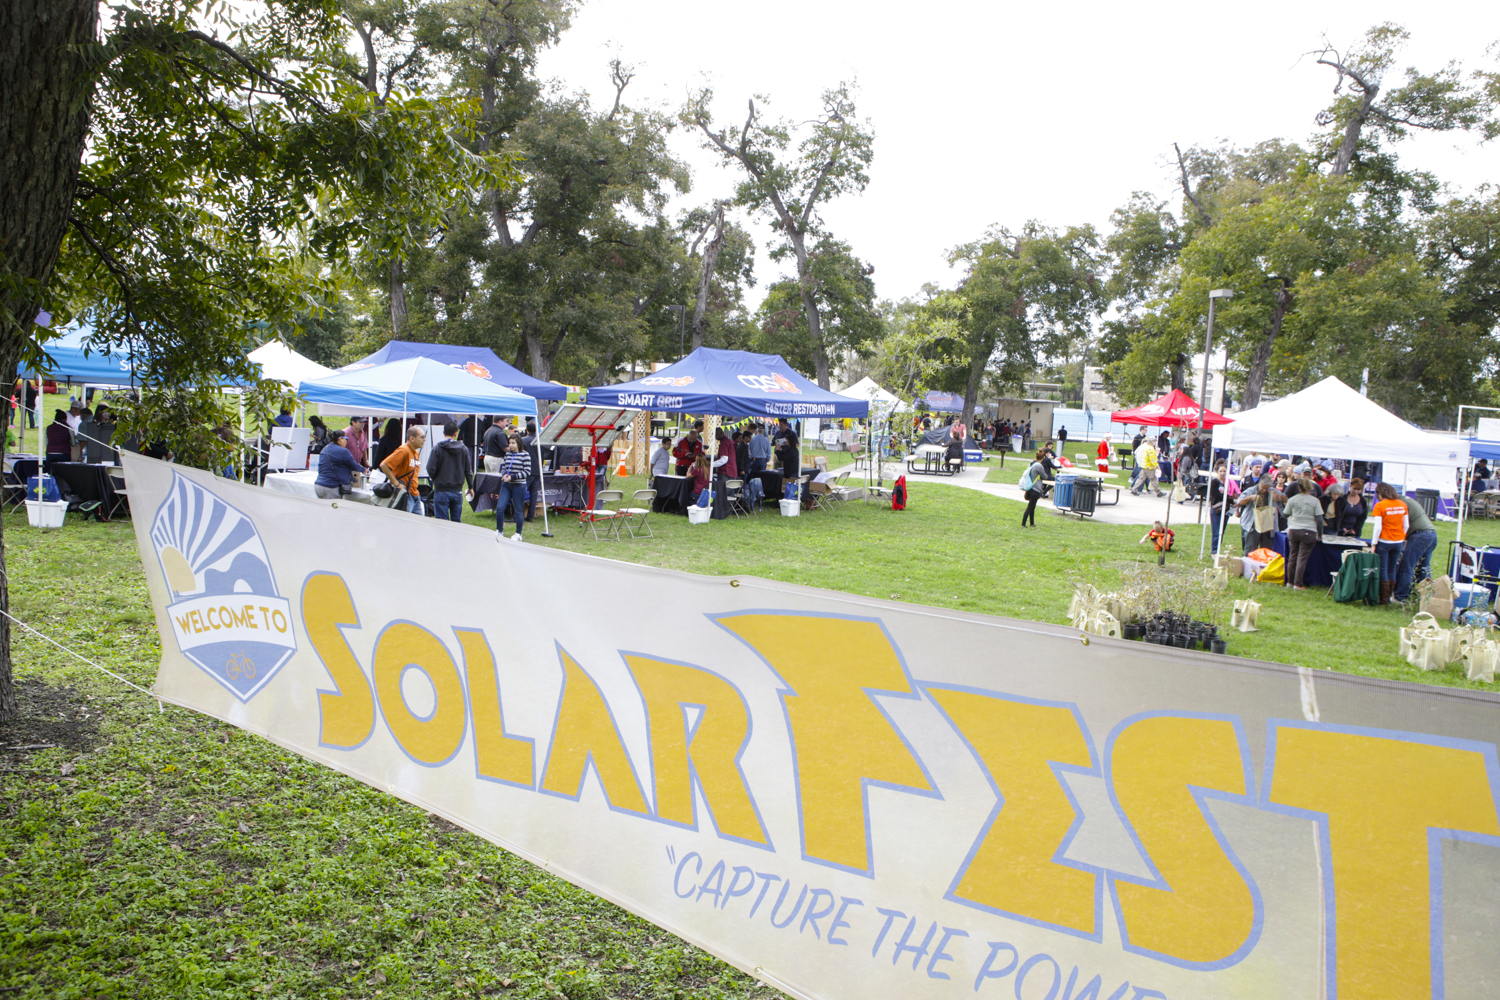 (Image) SolarFest banner tents bkgrnd